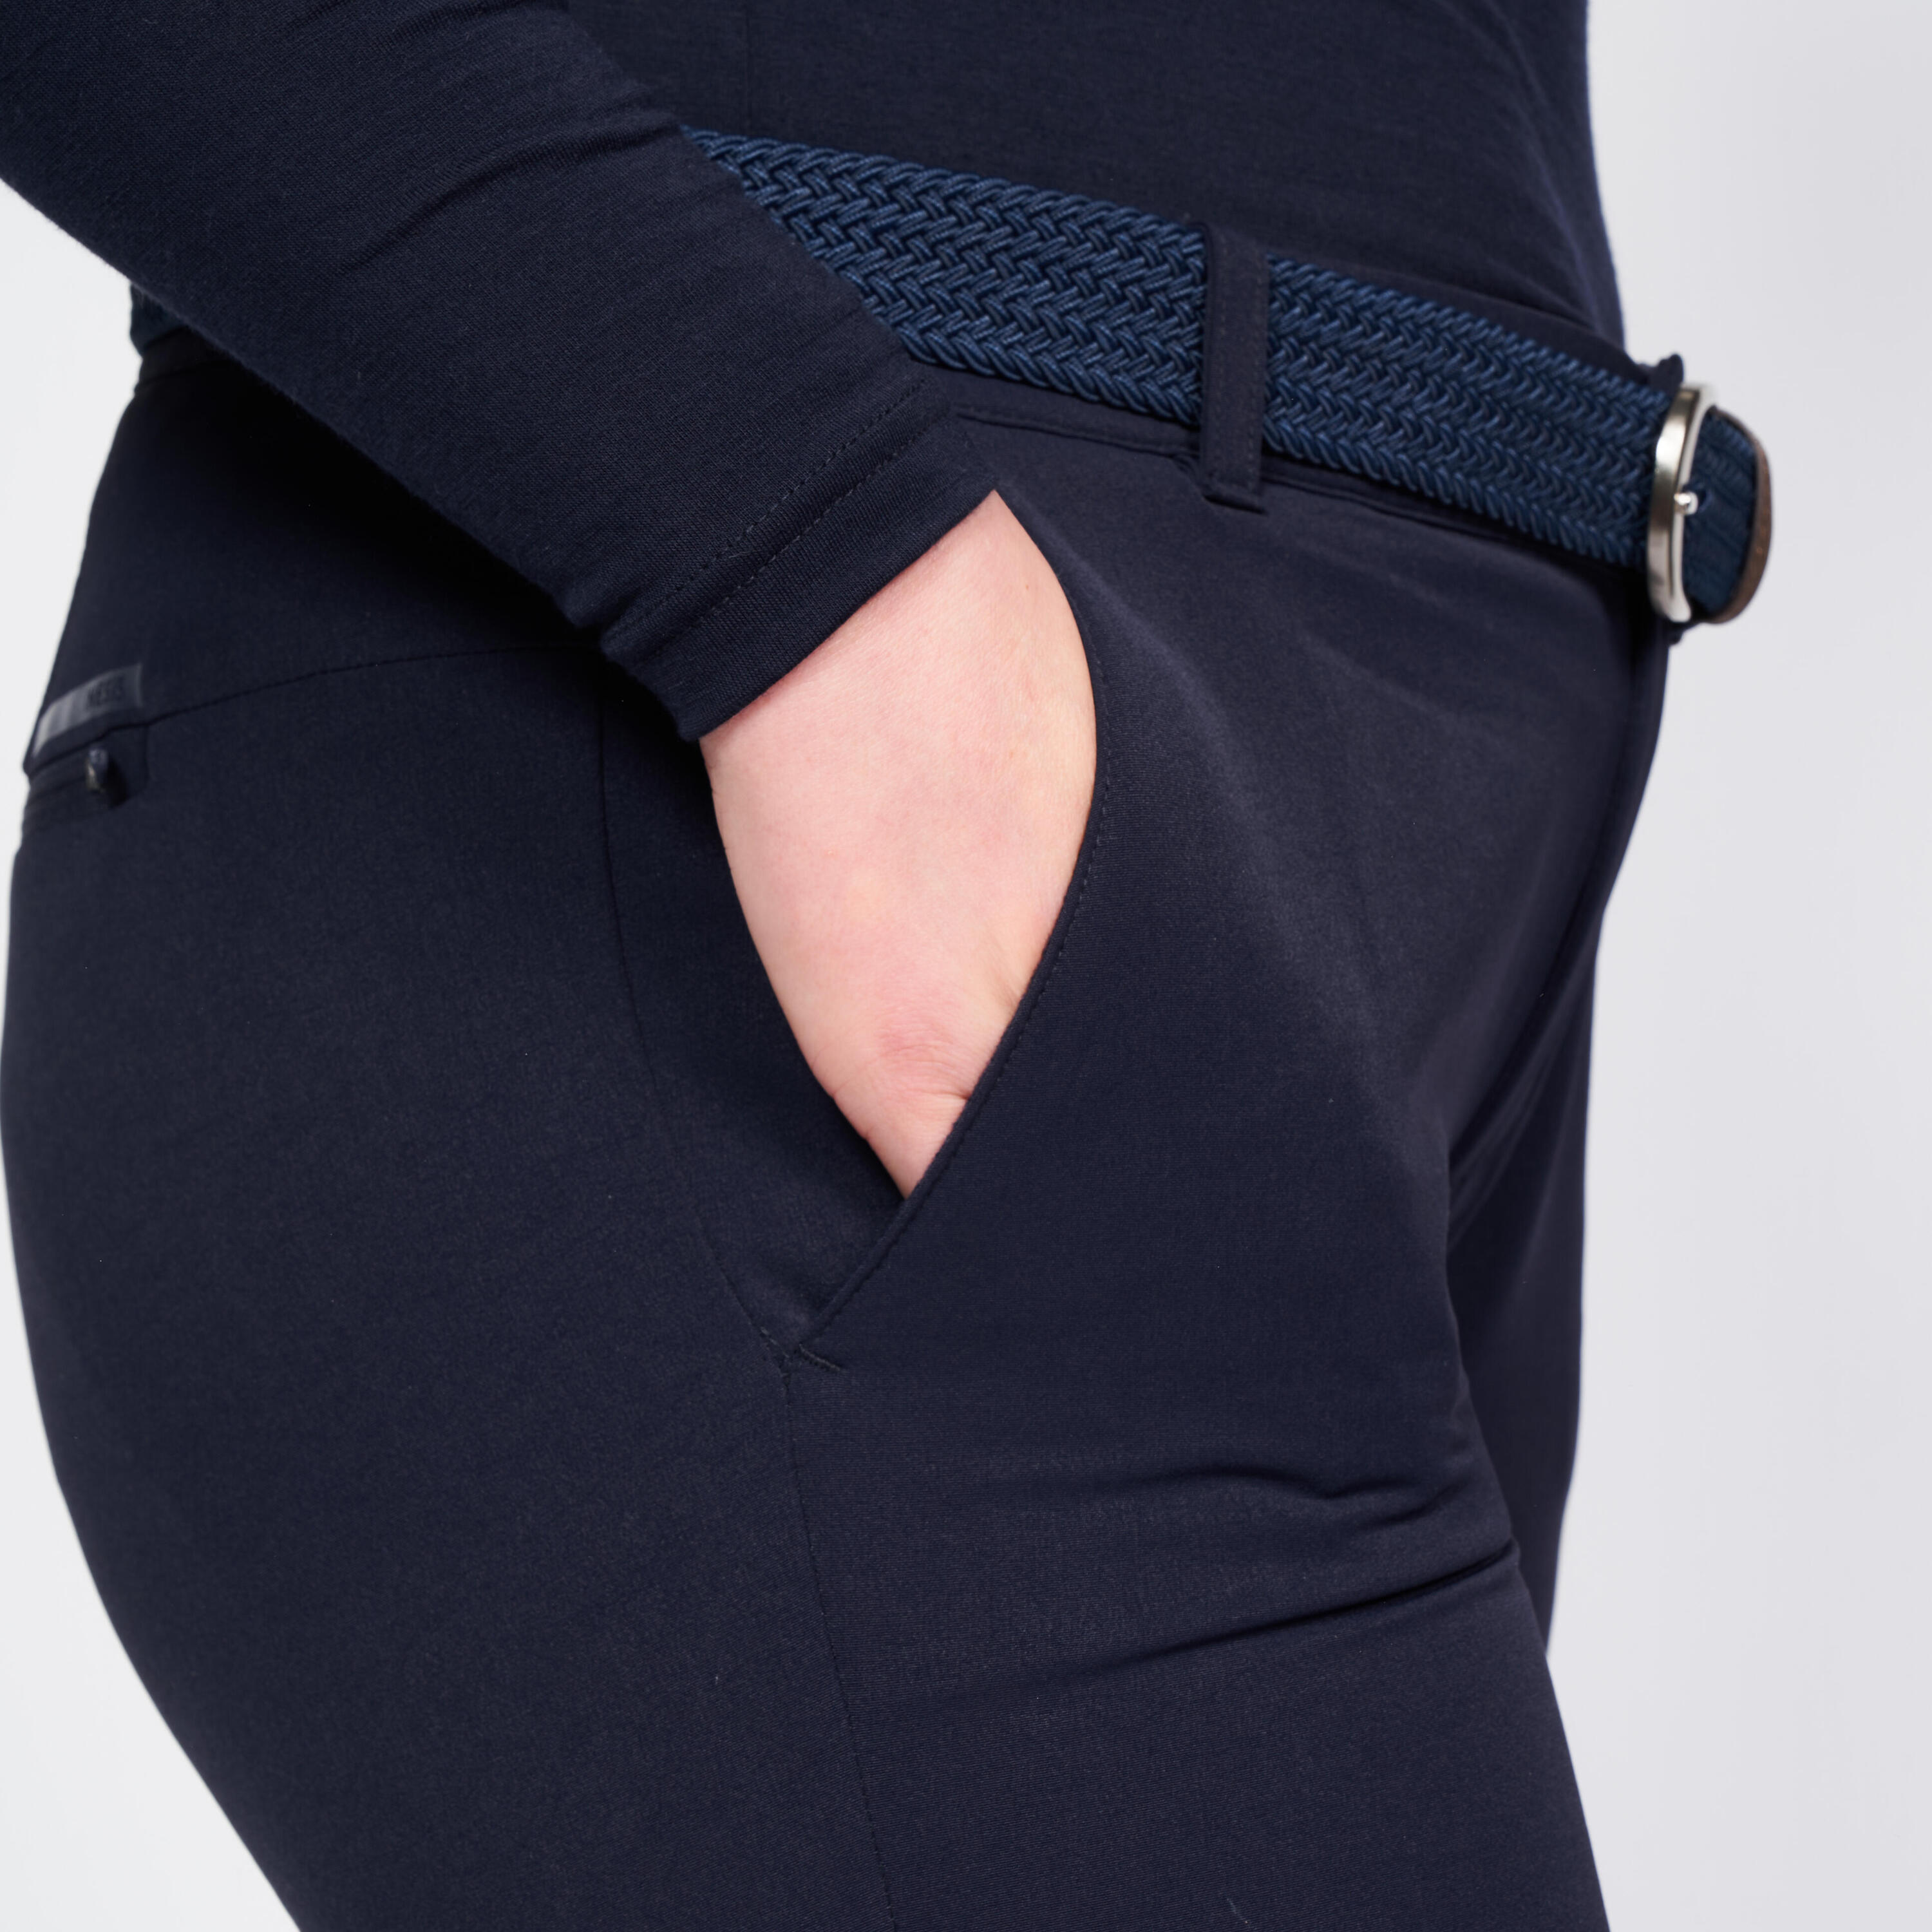 Women's golf winter trousers - CW500 navy blue 3/6